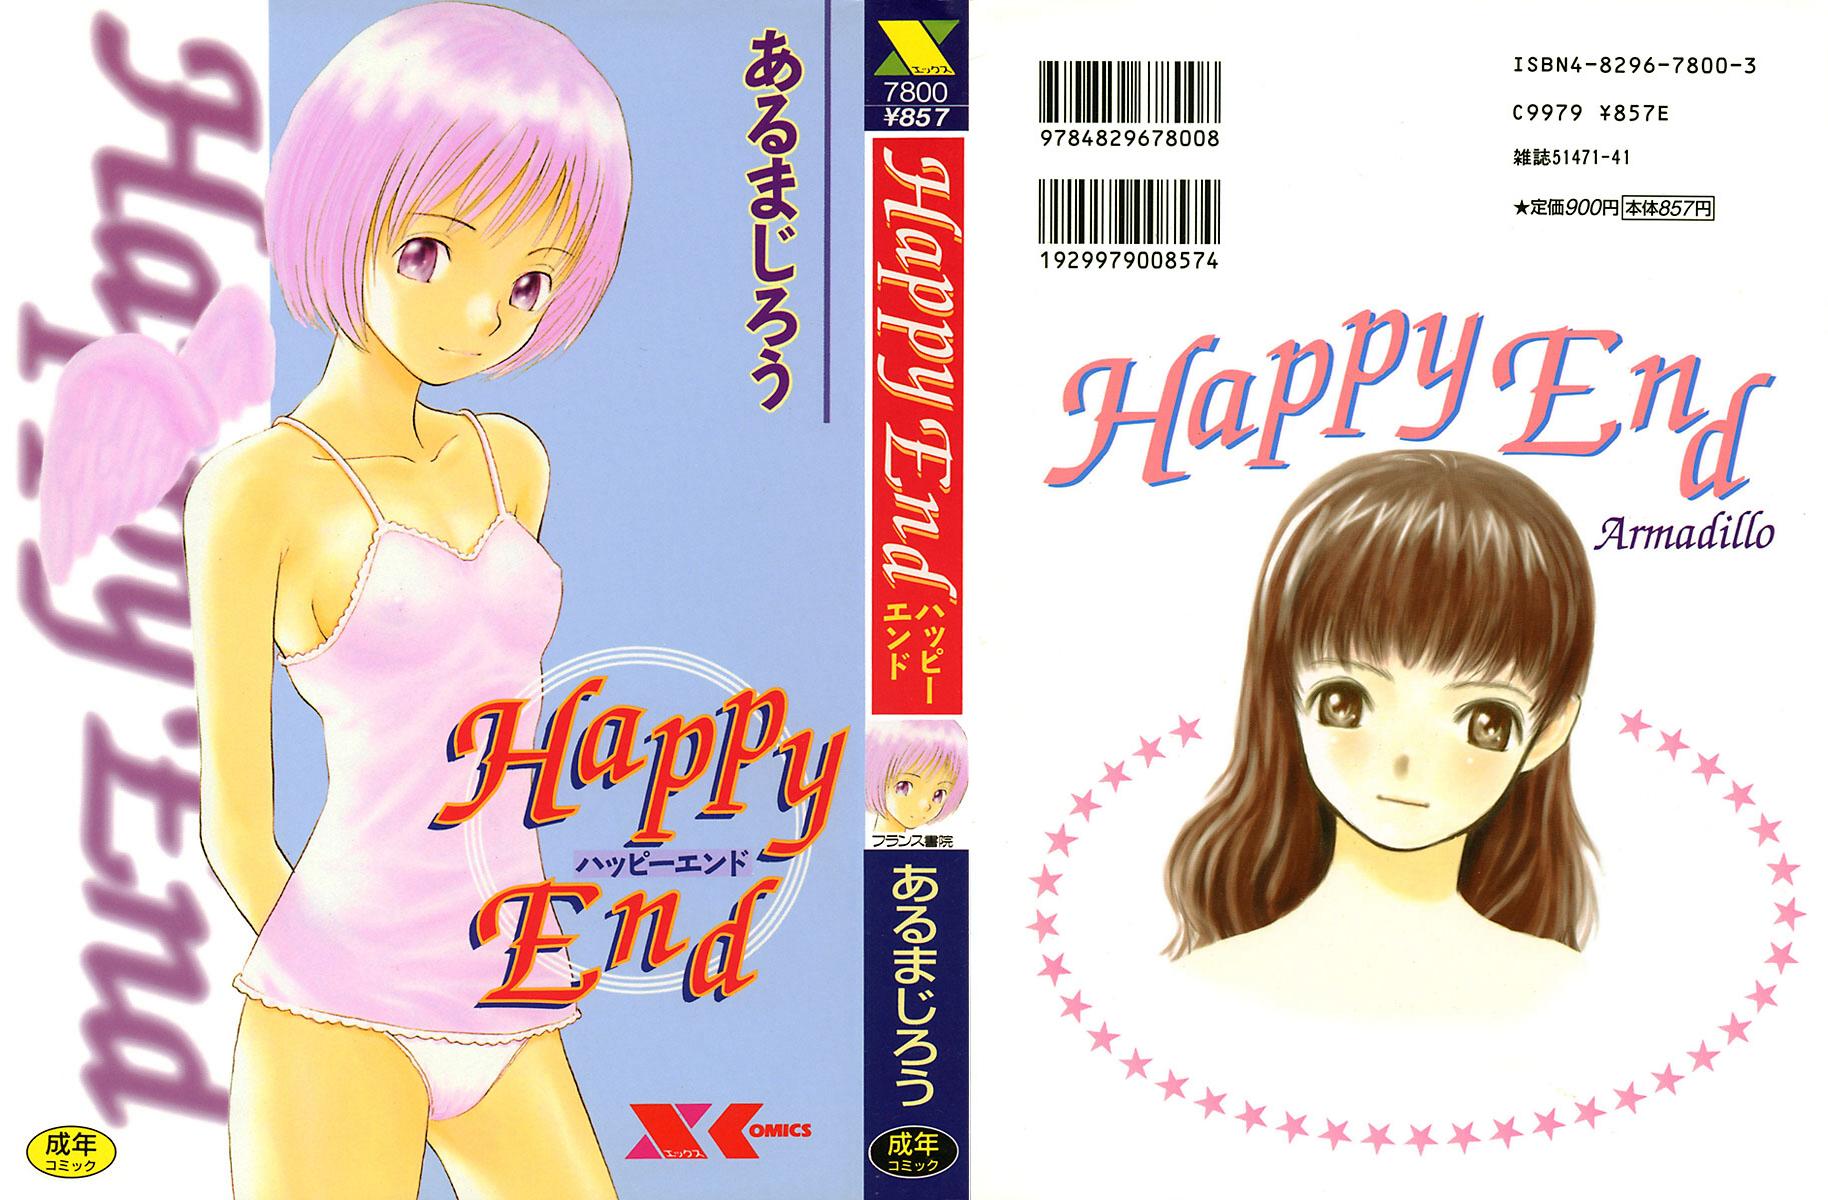 Aruma Jirou Happy End Cover